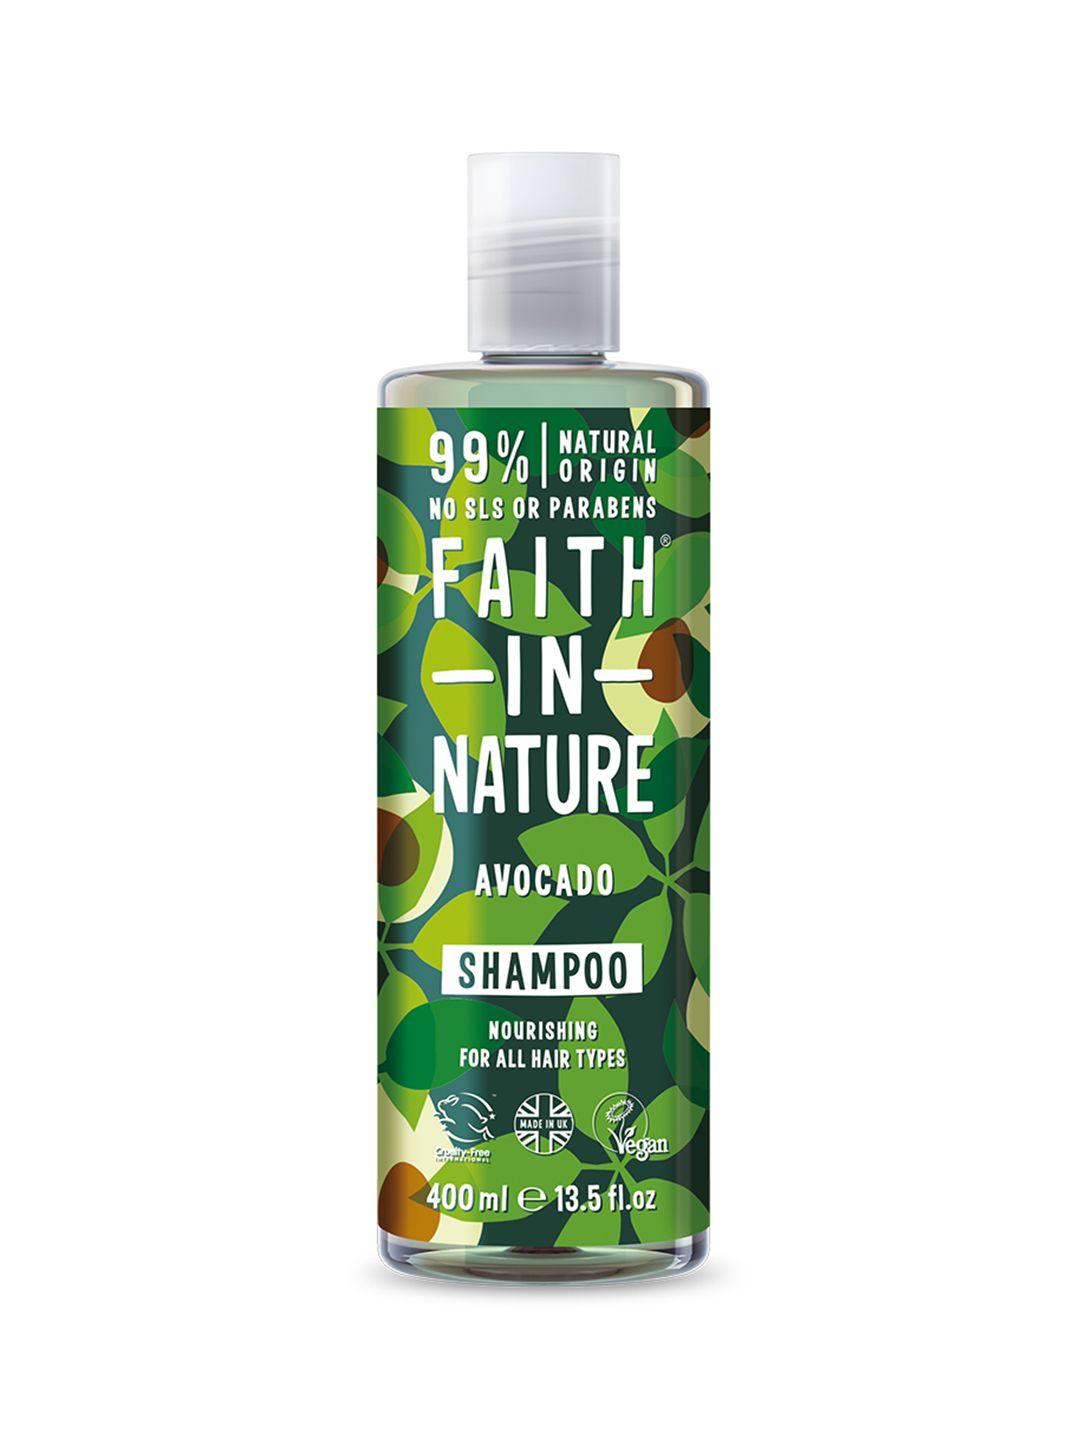 faith in nature avocado nourishing shampoo for all hair types - 400ml